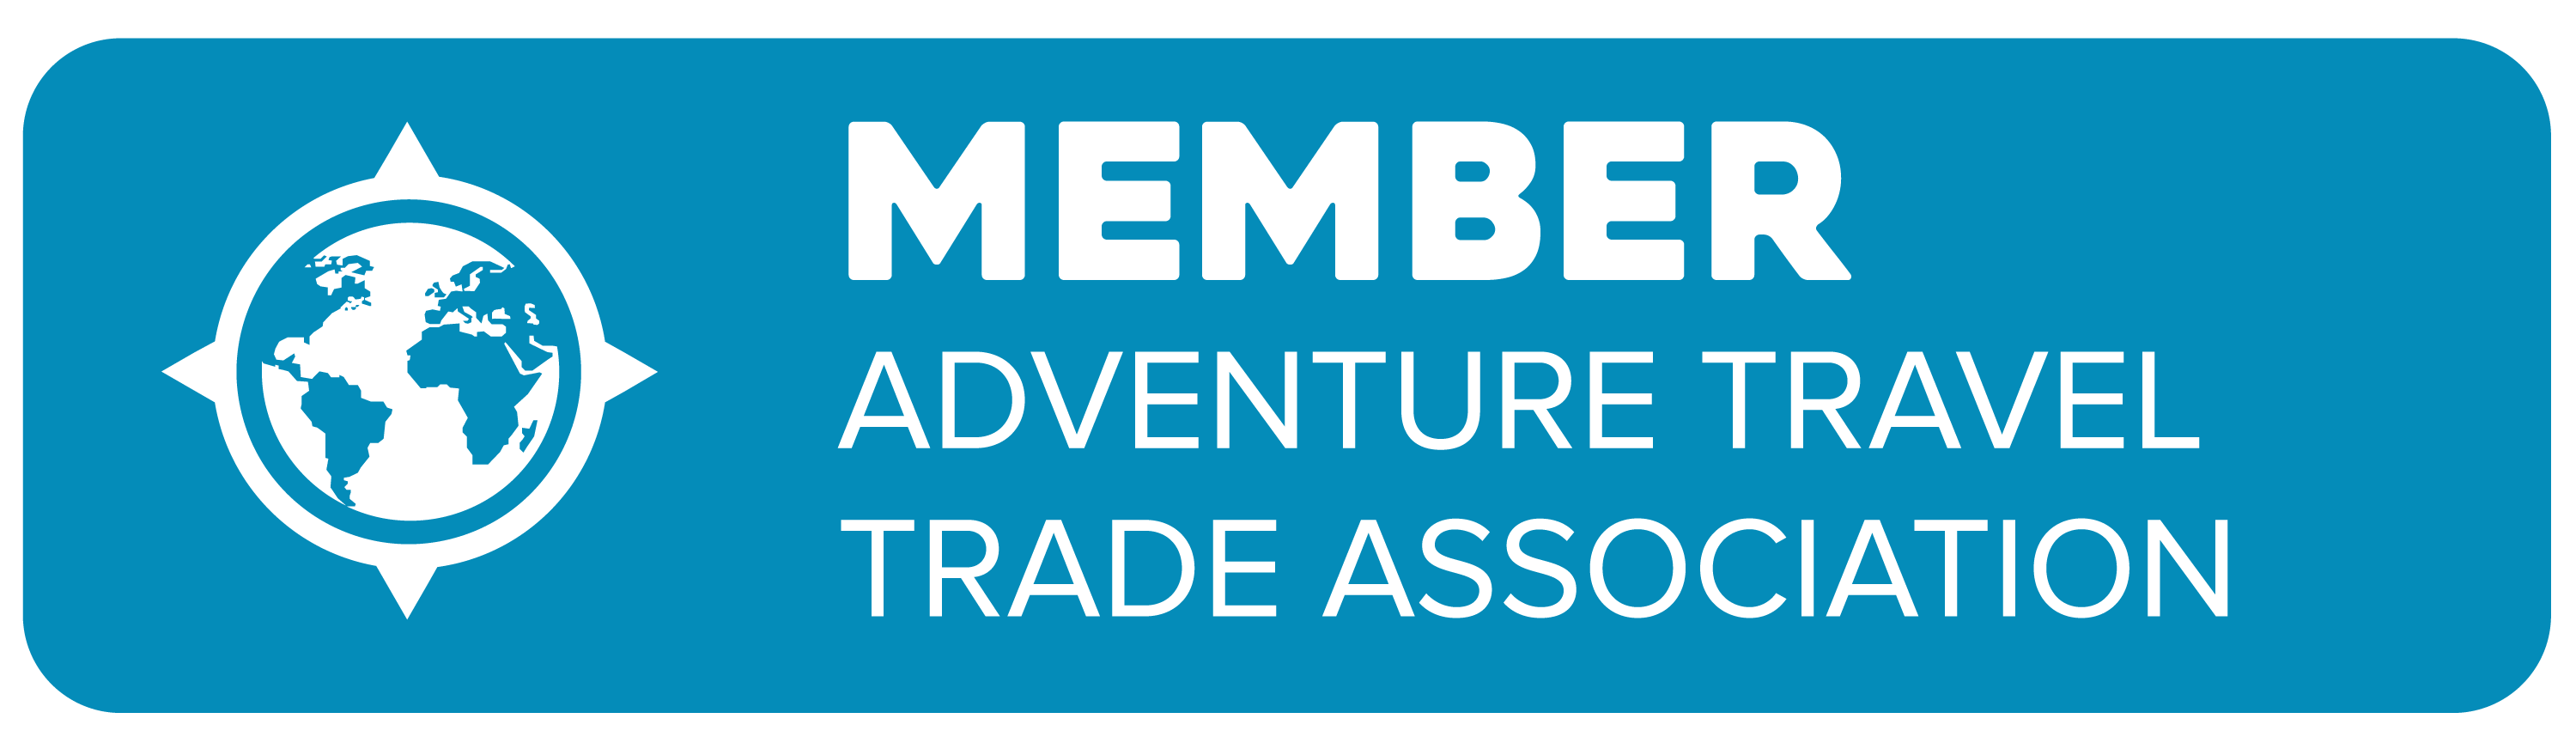 adventure travel trade association badge